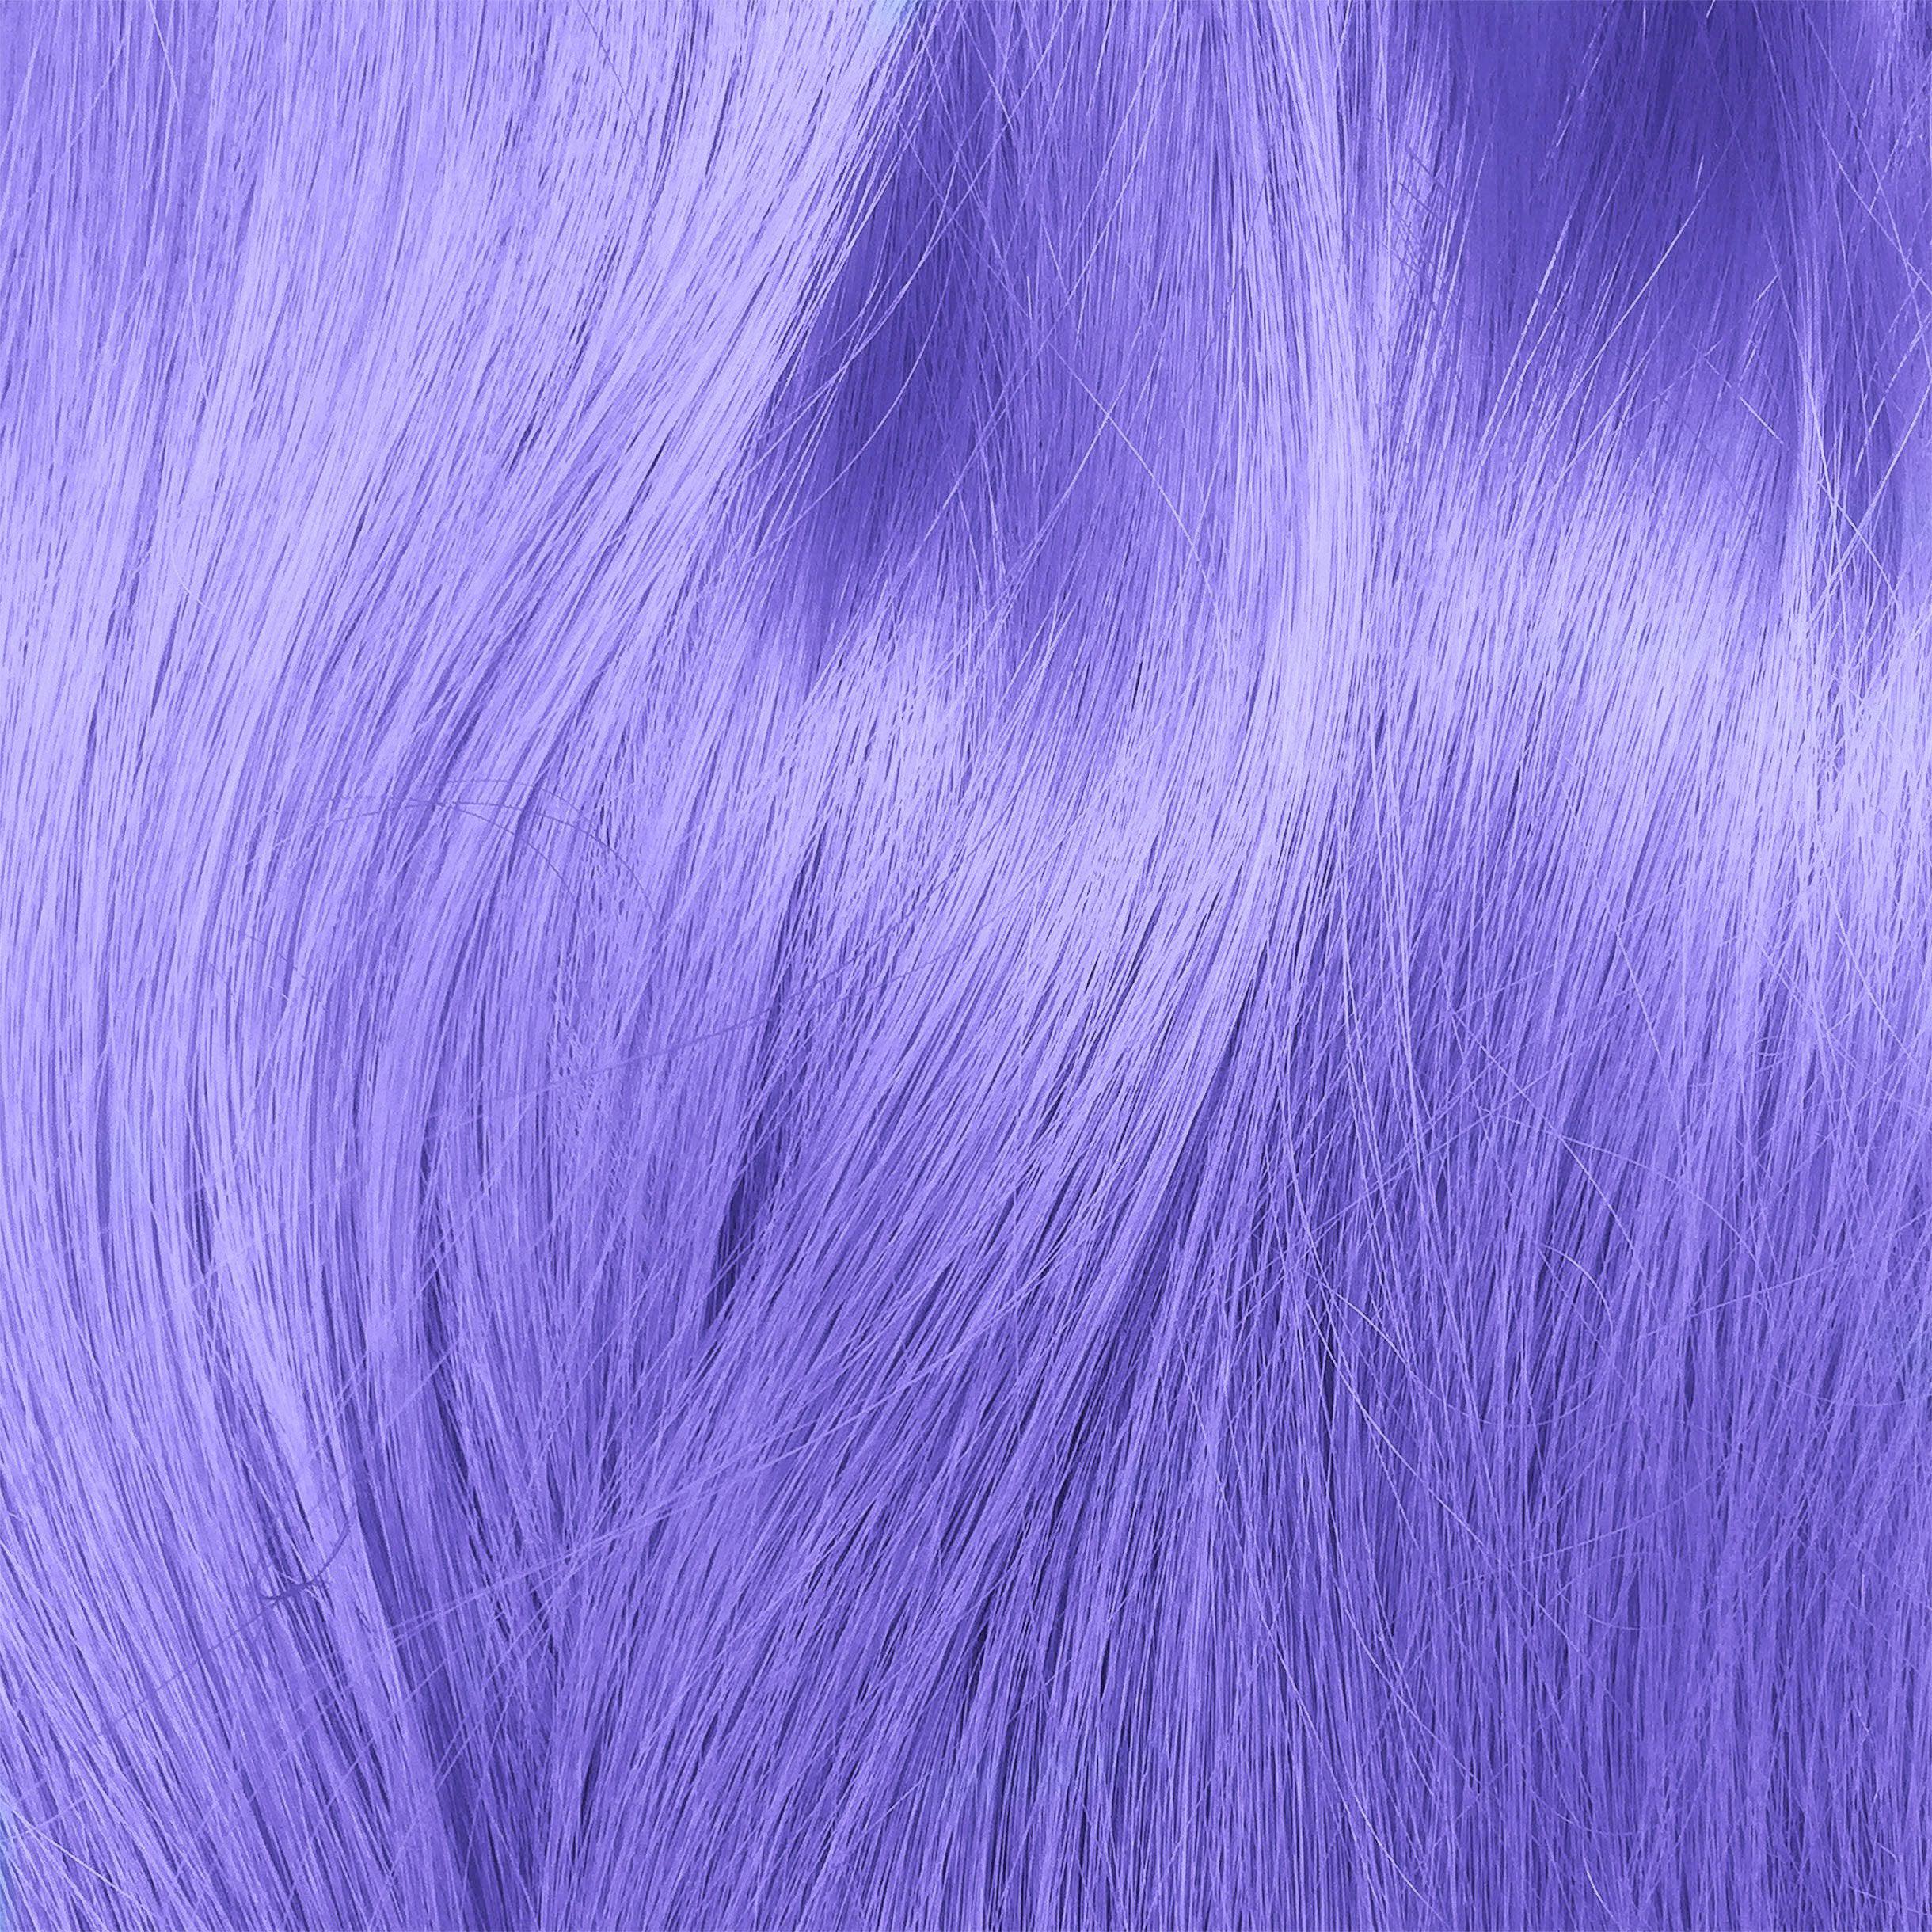 Unicorn Hair Tints variant:Cloud